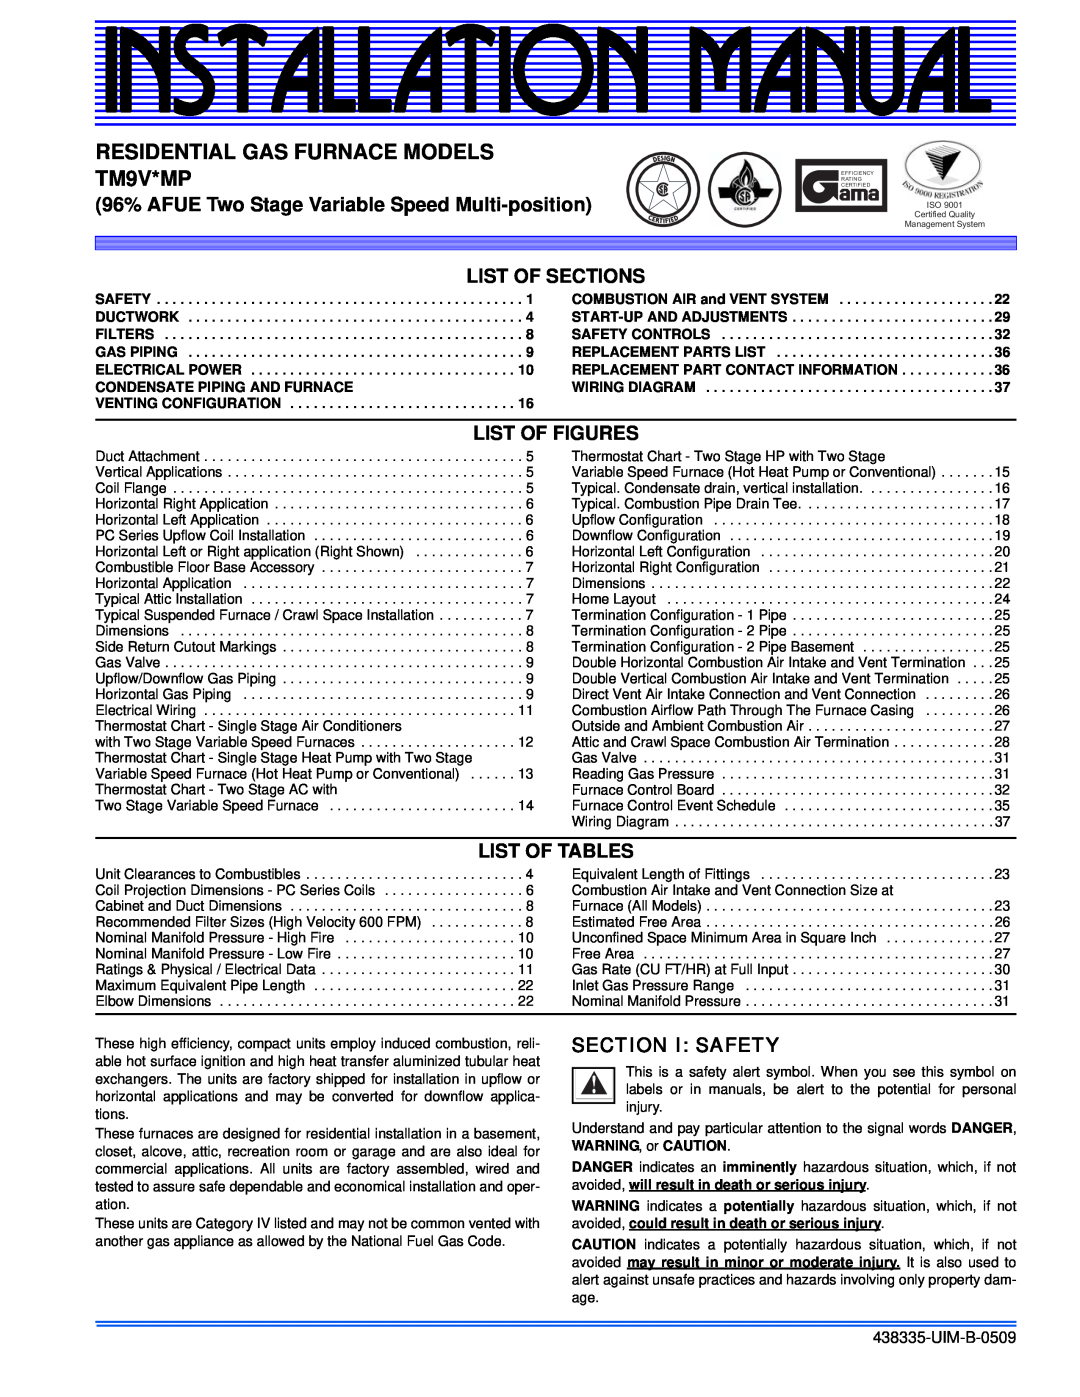 Johnson Controls TM9V MP installation manual Installation Manual, RESIDENTIAL GAS FURNACE MODELS TM9V*MP, List Of Sections 